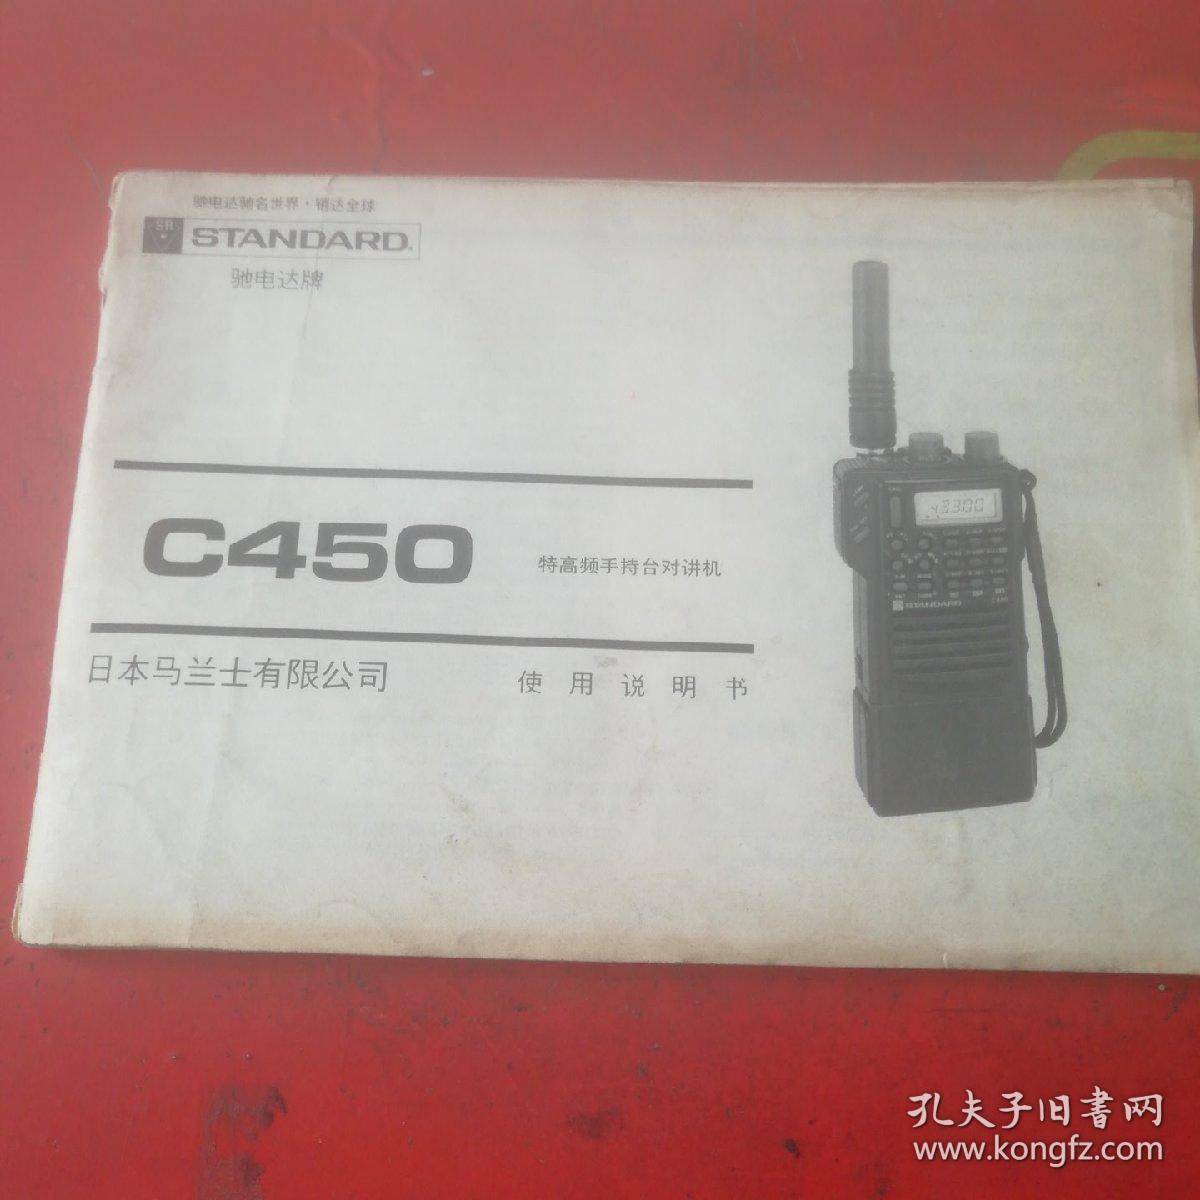 C450特高频手持台对讲机